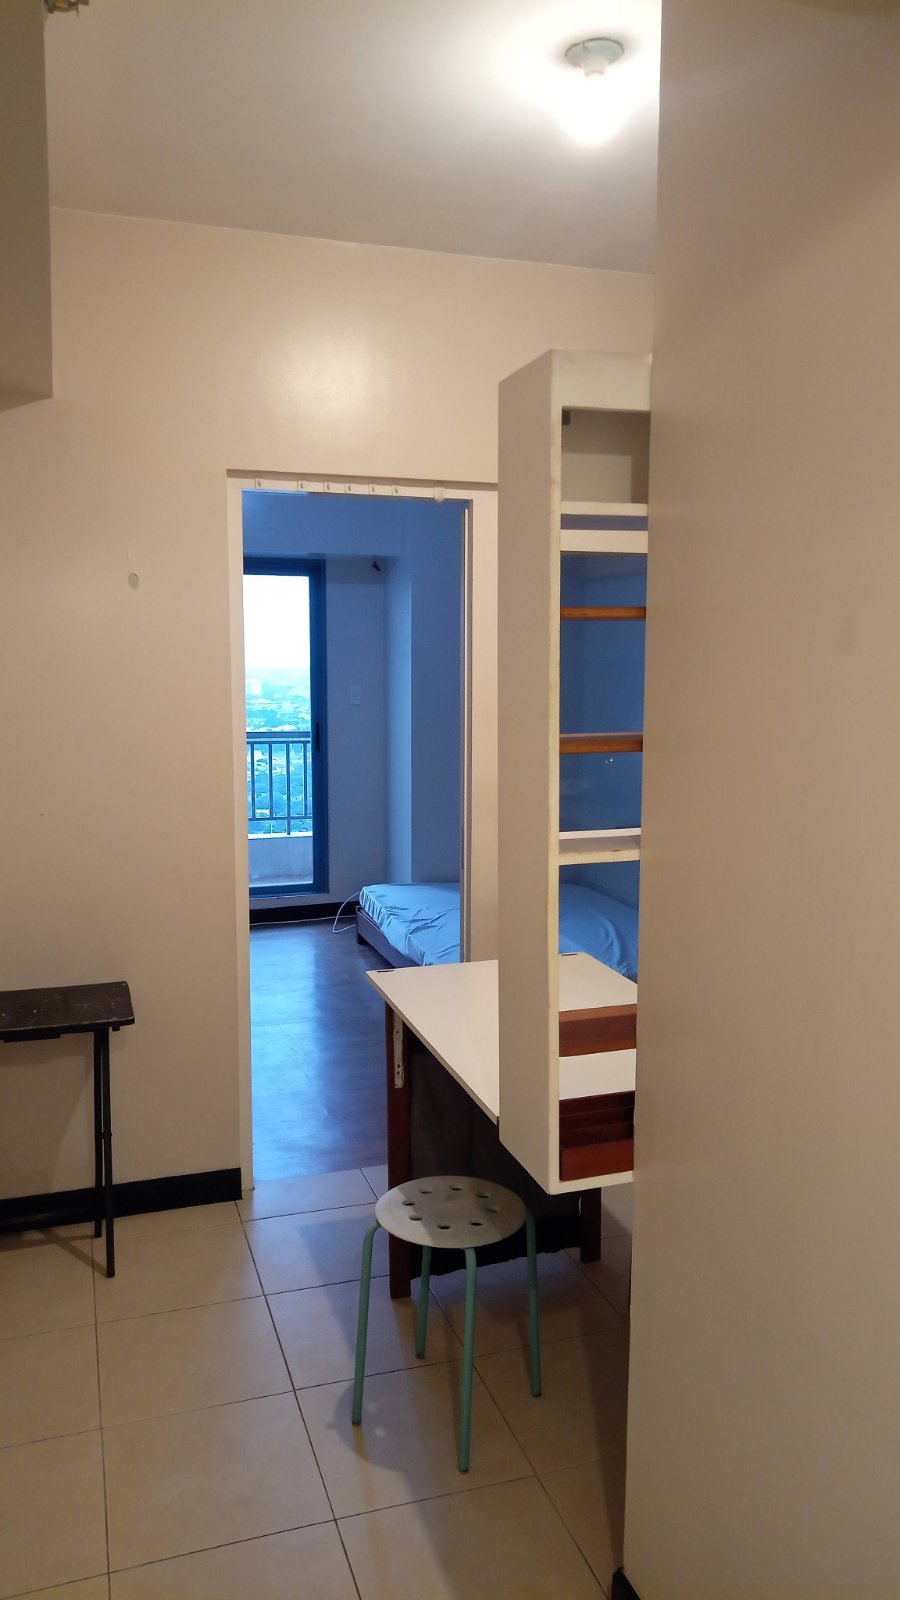 Condo Unit For Rent – 39th Floor Hibiscus Tower at Tivoli Garden Residences